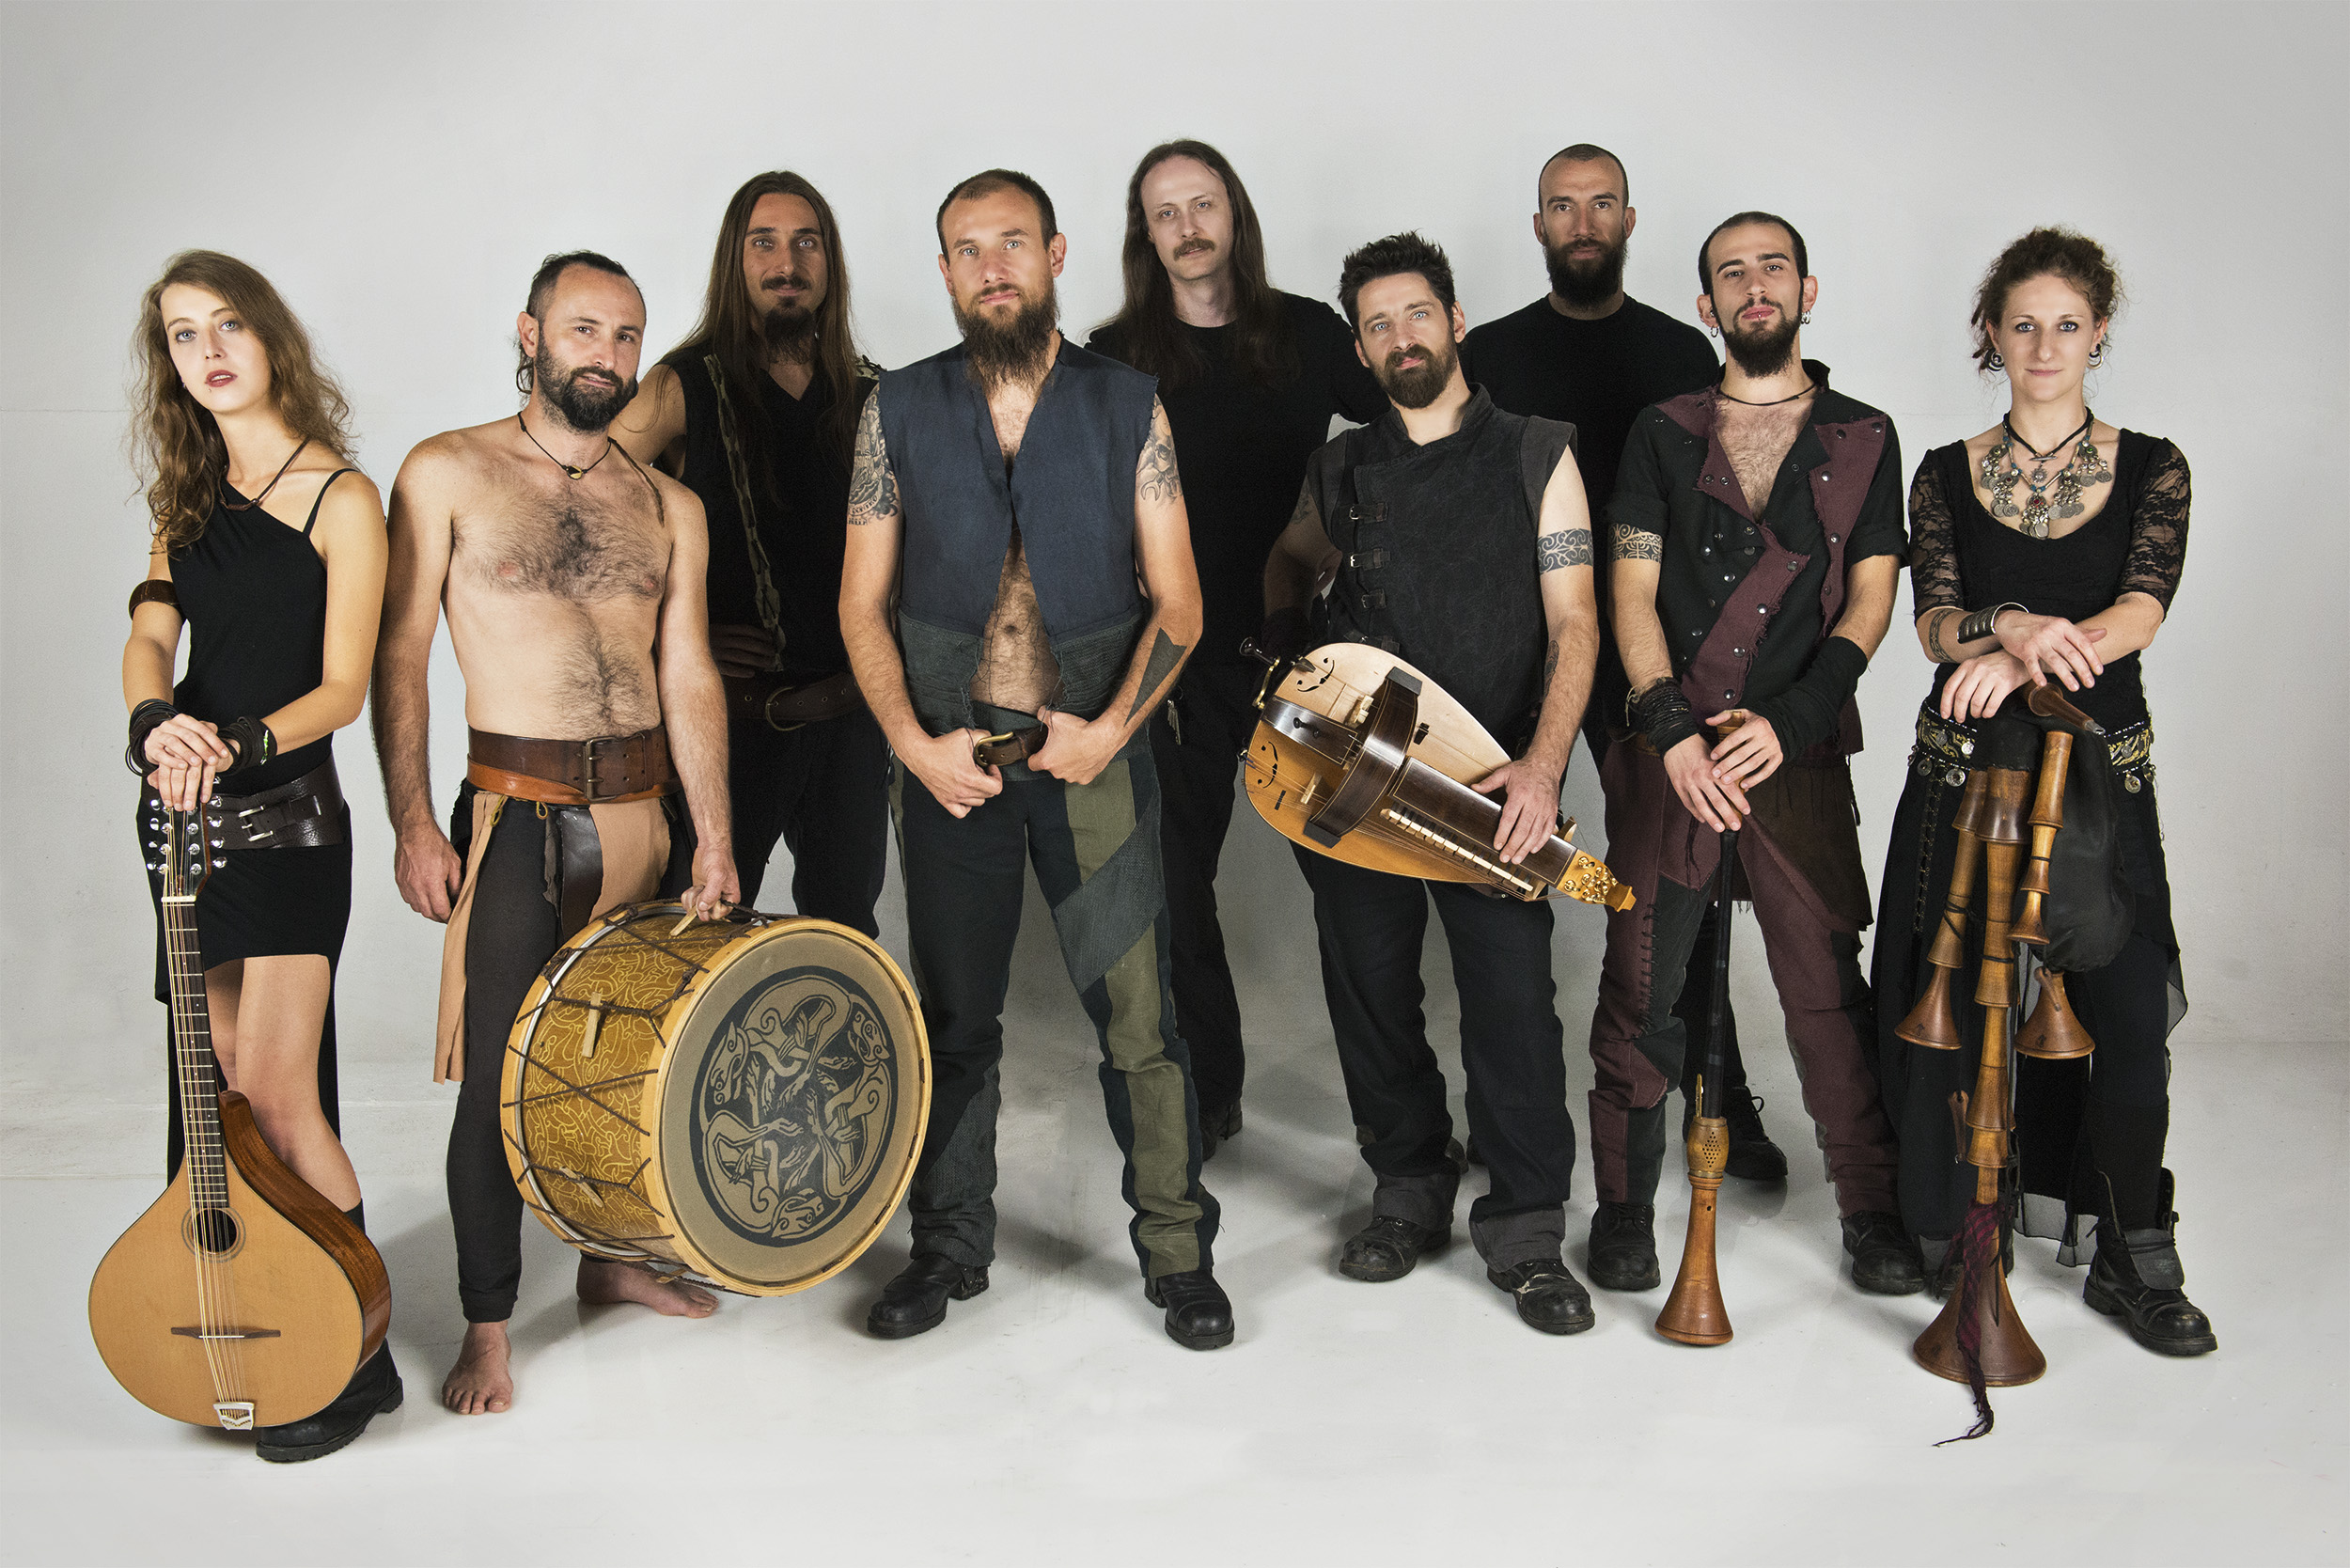 Folkstone: Medieval Rock / Folk Metal band